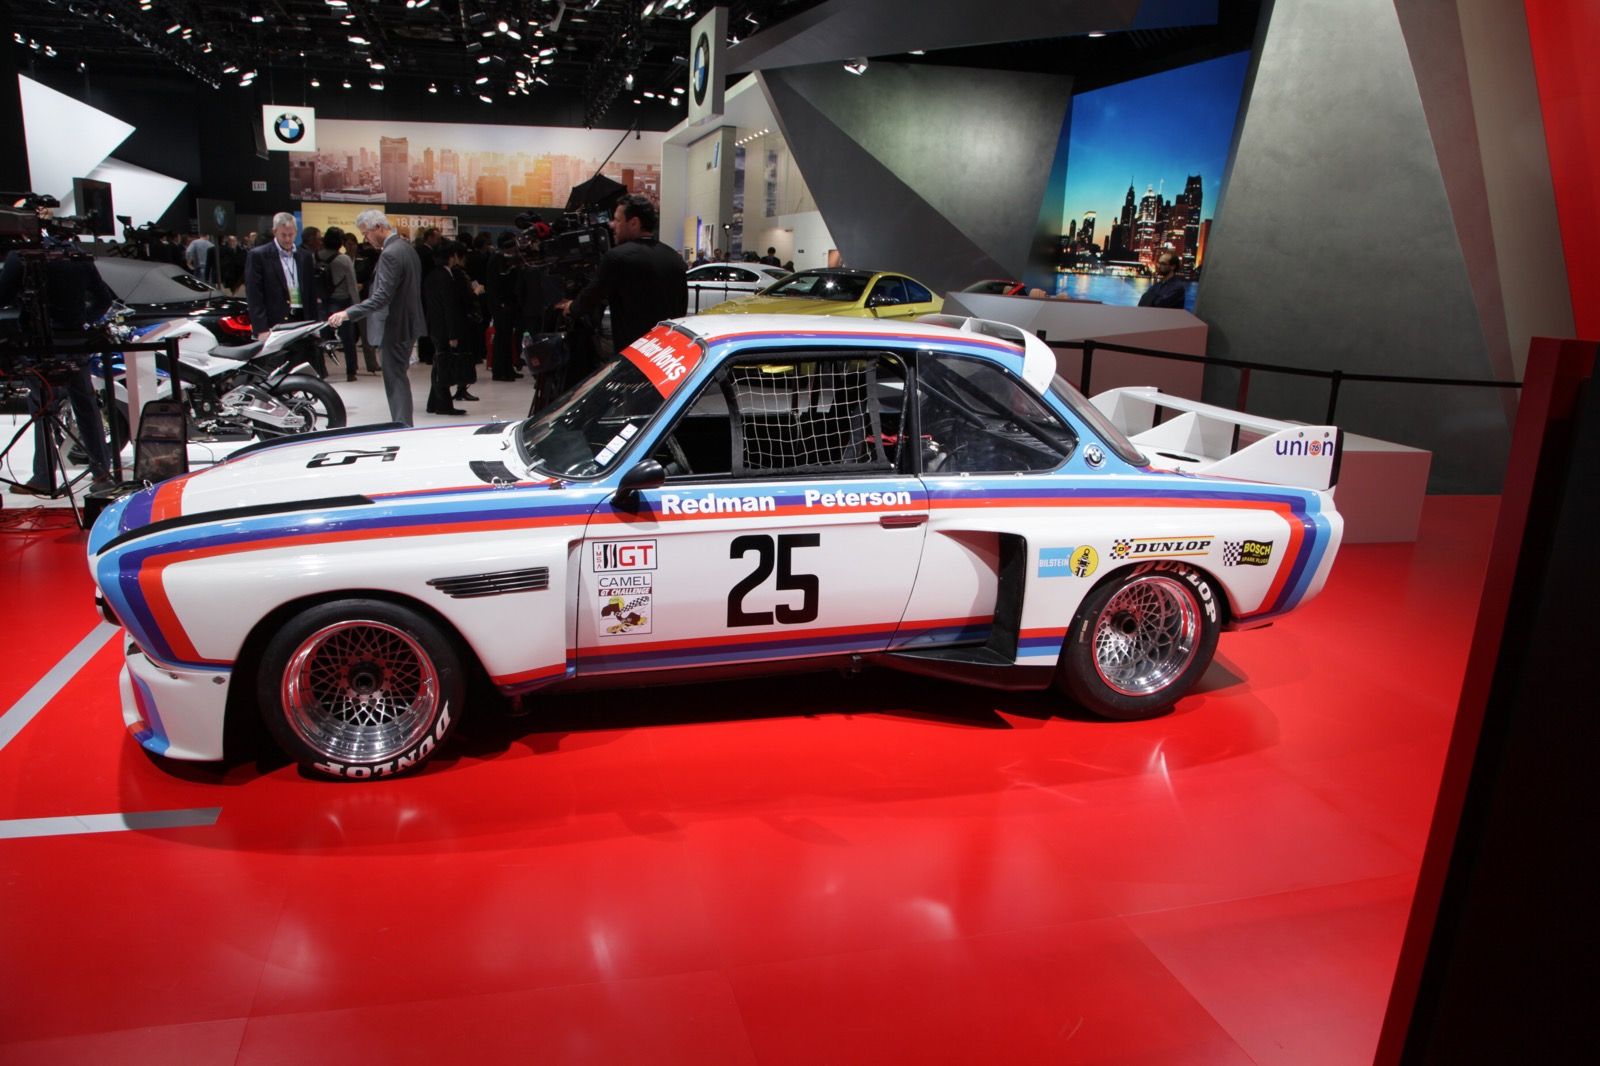 1975 BMW 3.0 CSL